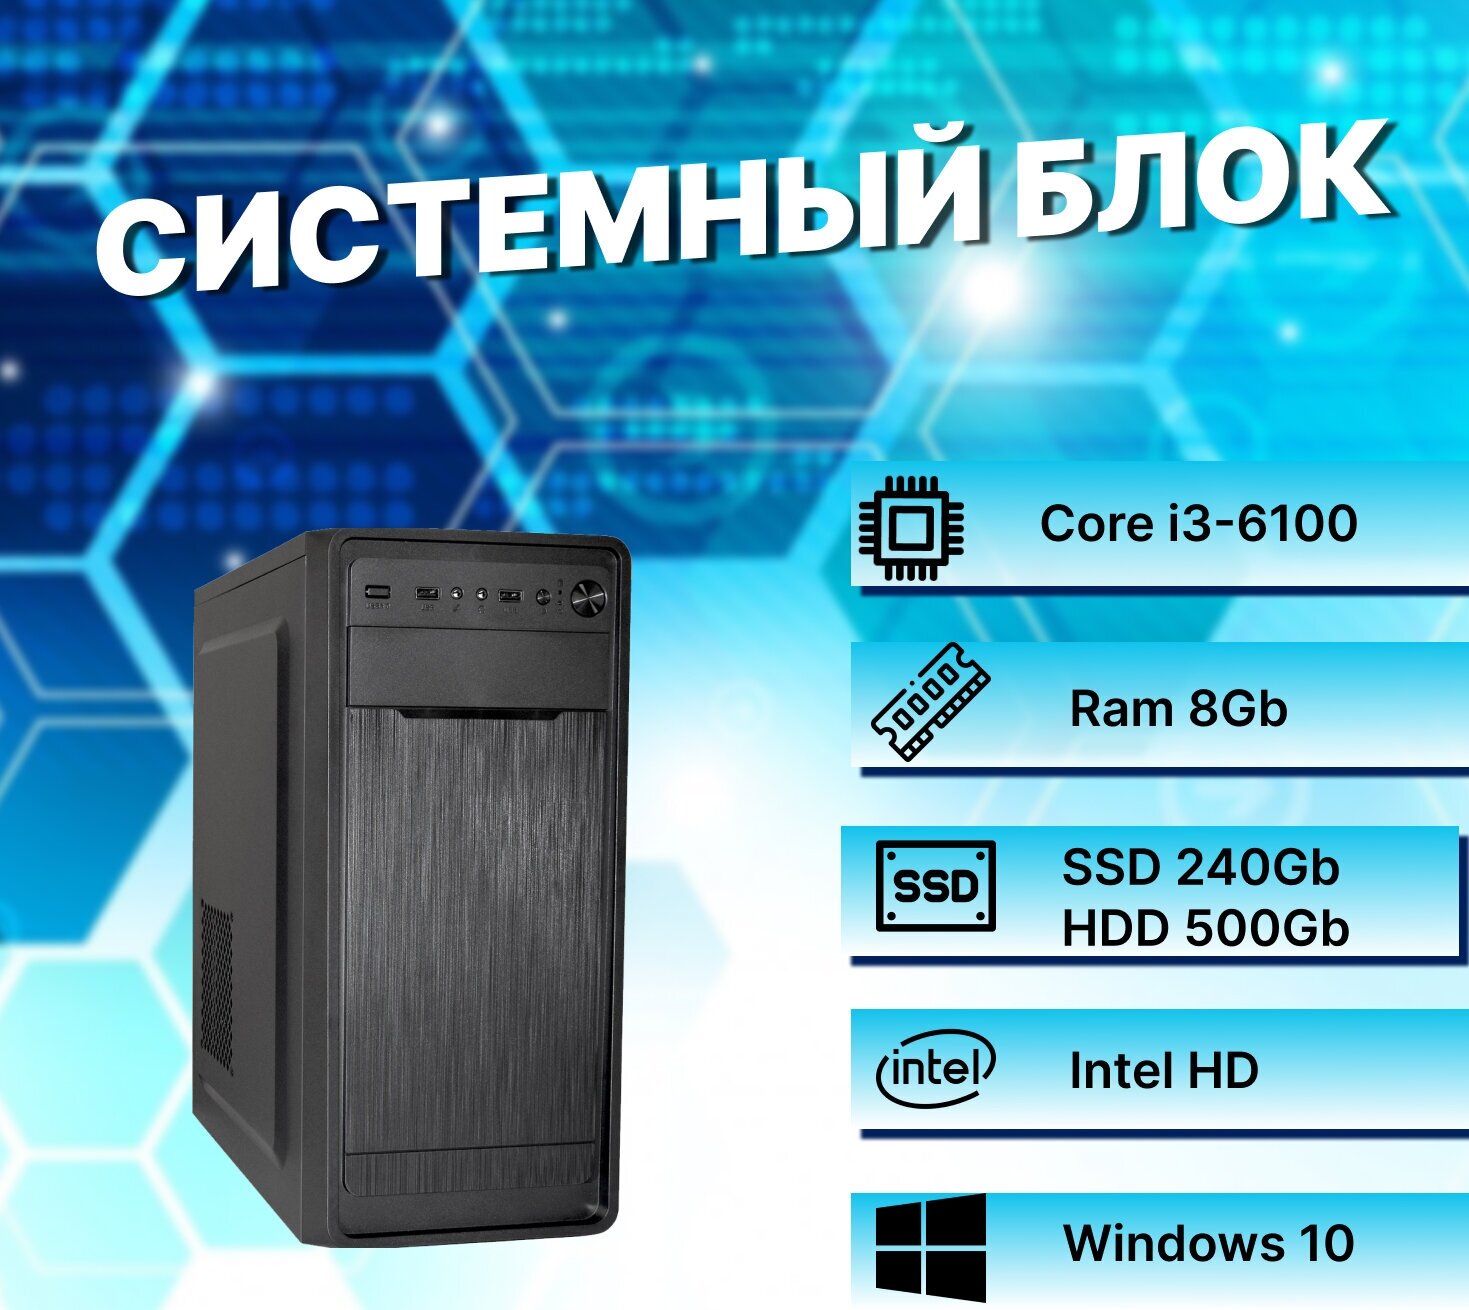 Системный блок Intel Core I3-6100 (3.7ГГц)/ RAM 8Gb/ SSD 240Gb/ HDD 500Gb/ Intel HD/ Windows 10 Pro